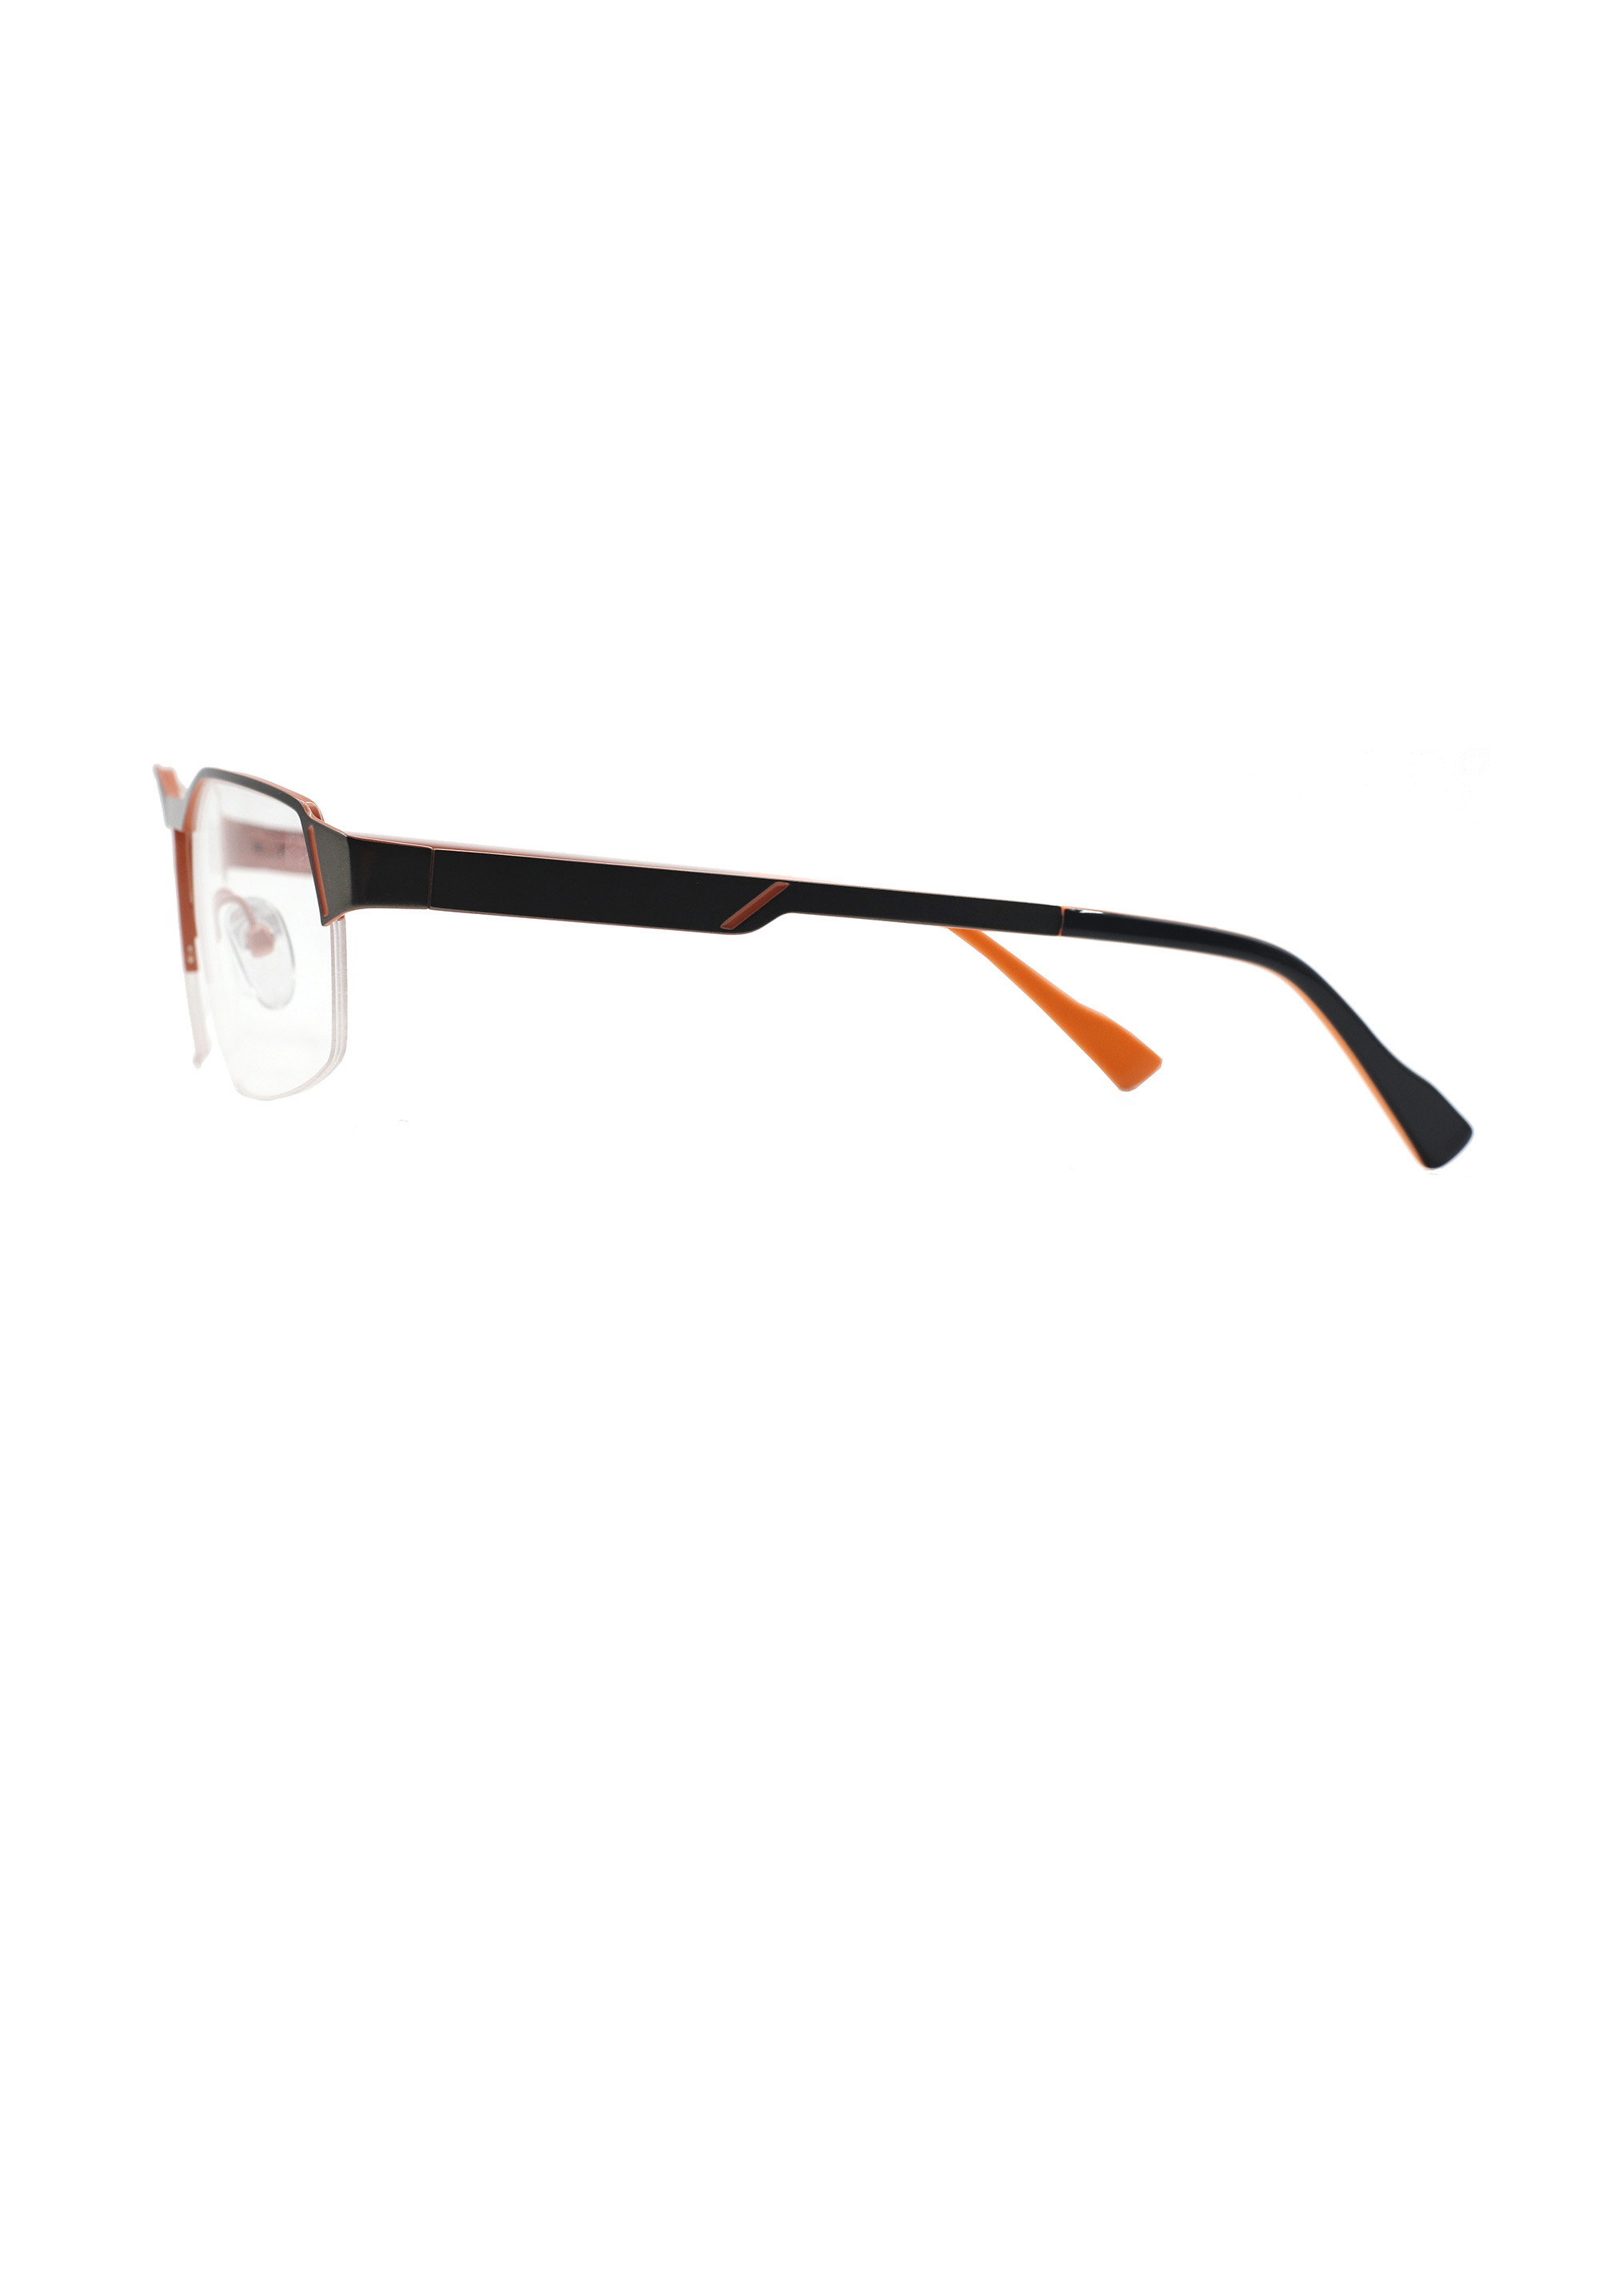 Male fashion optical metal glasses